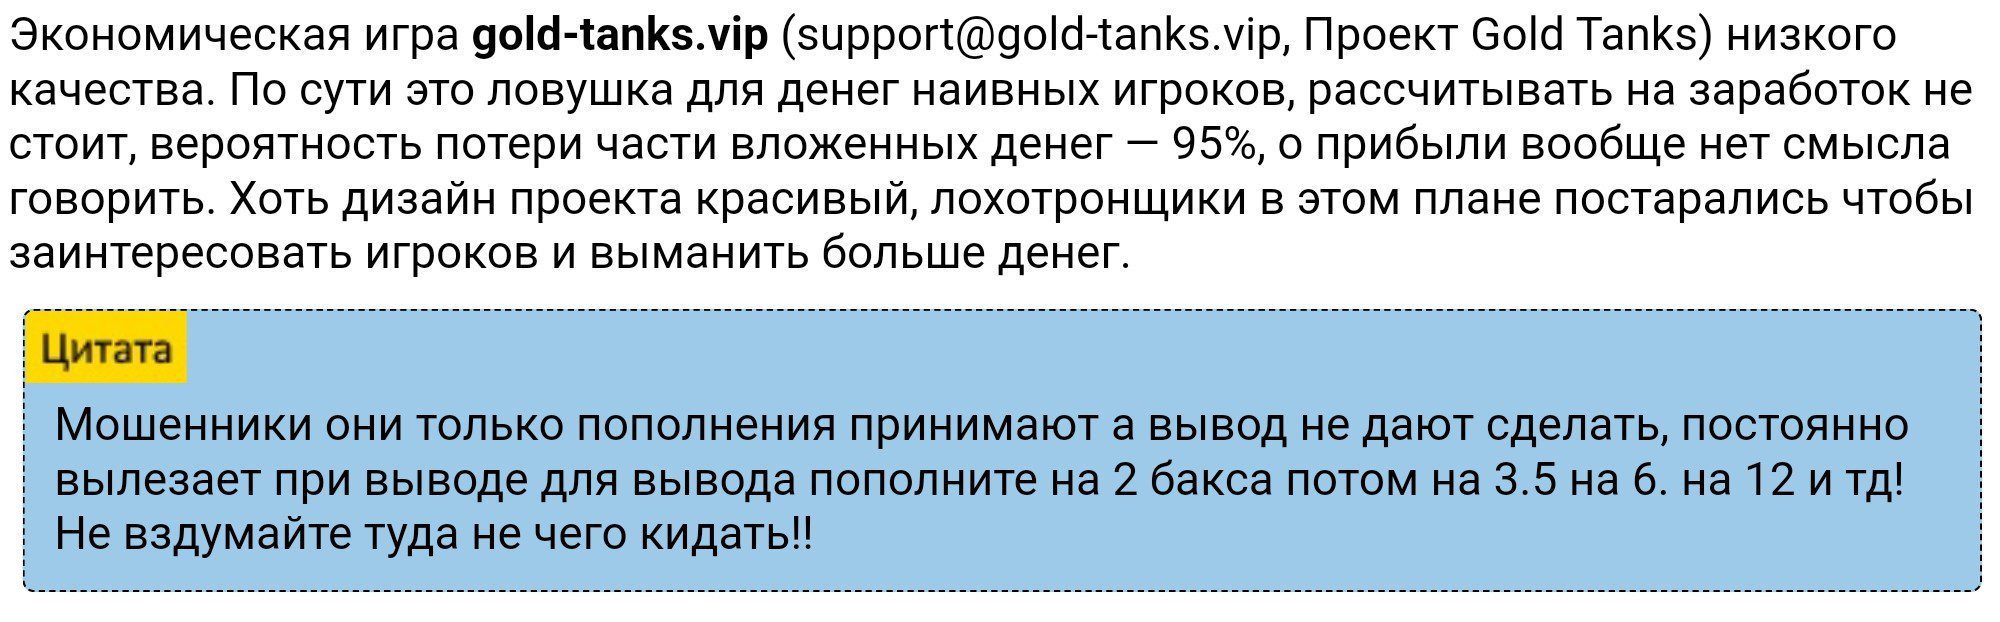 Gold tanks vip отзывы